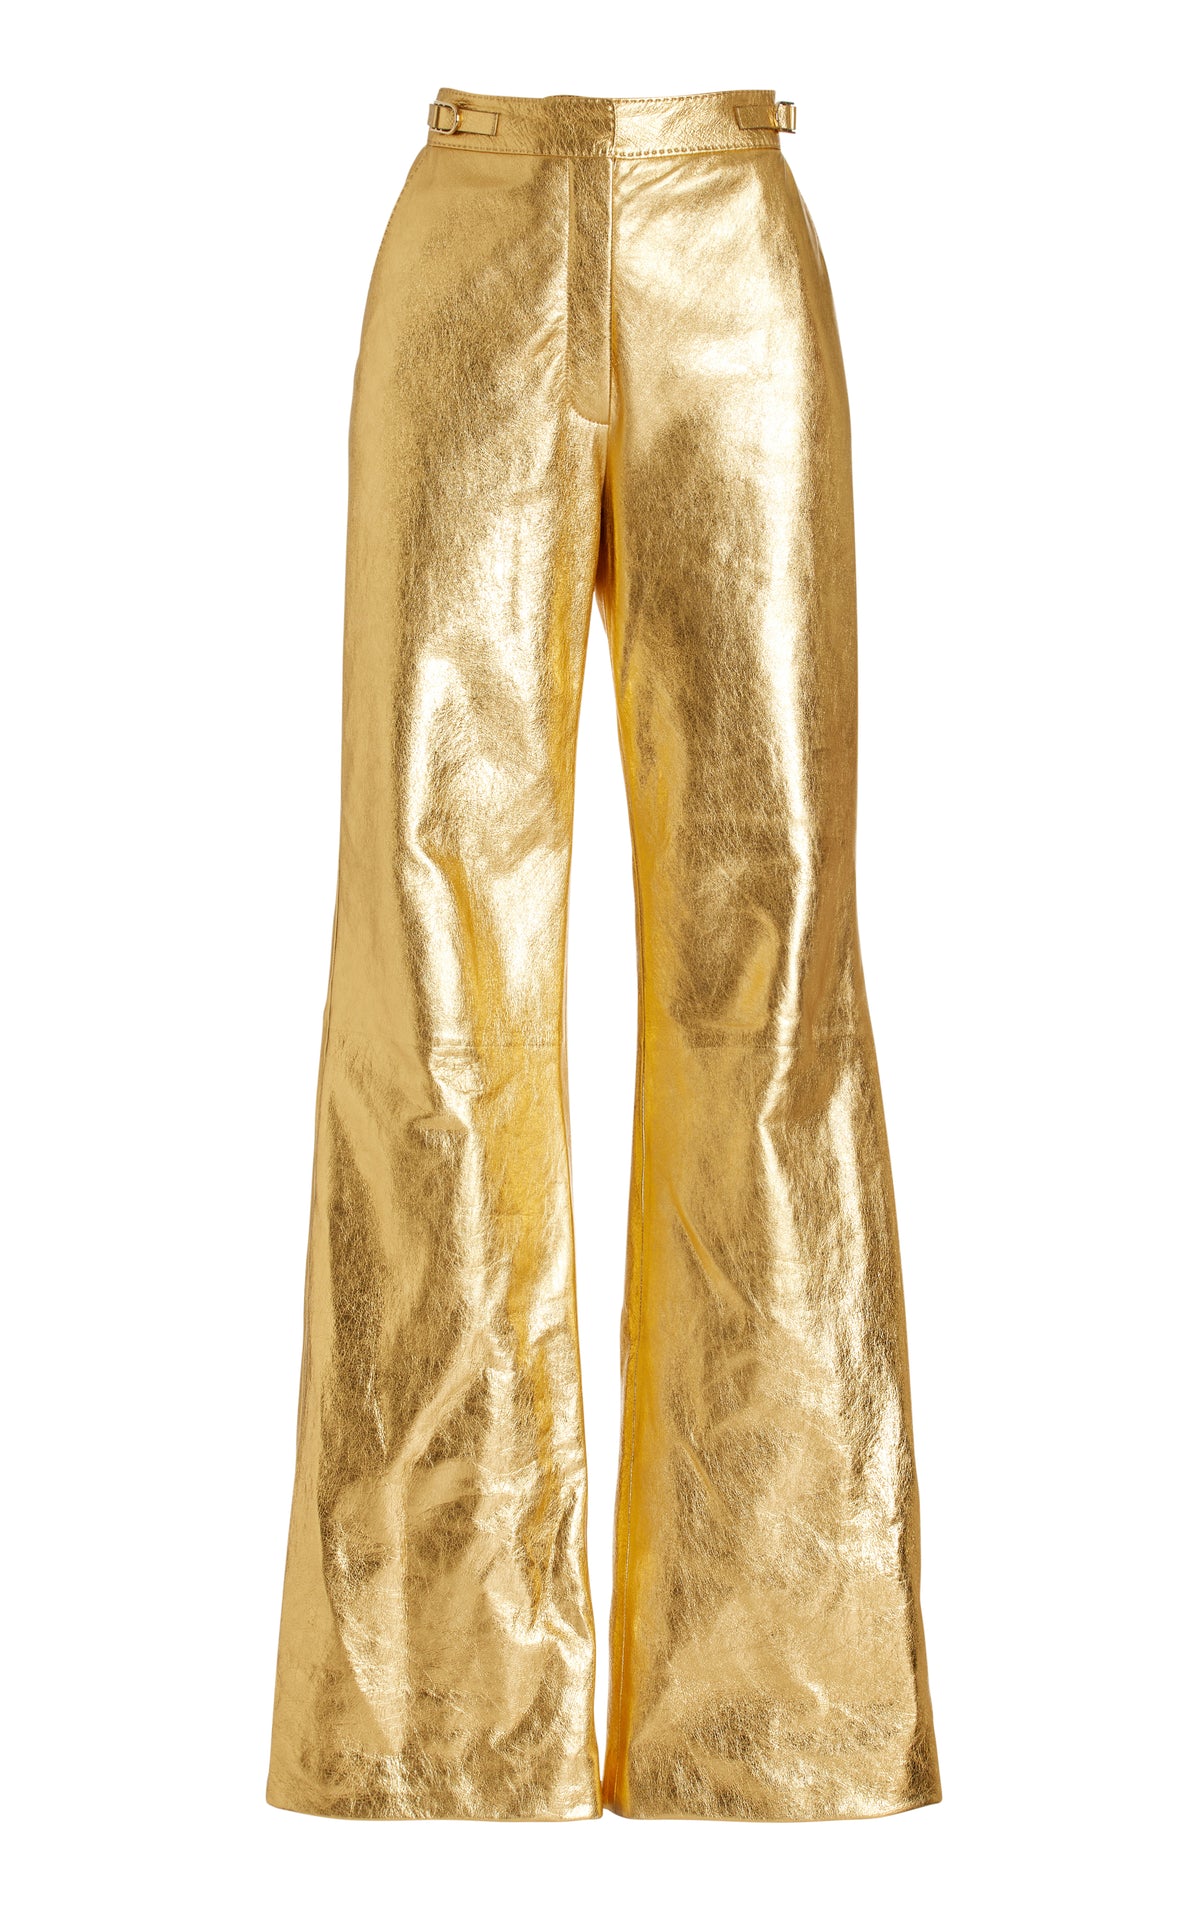 Vesta Pant in Gold Leather